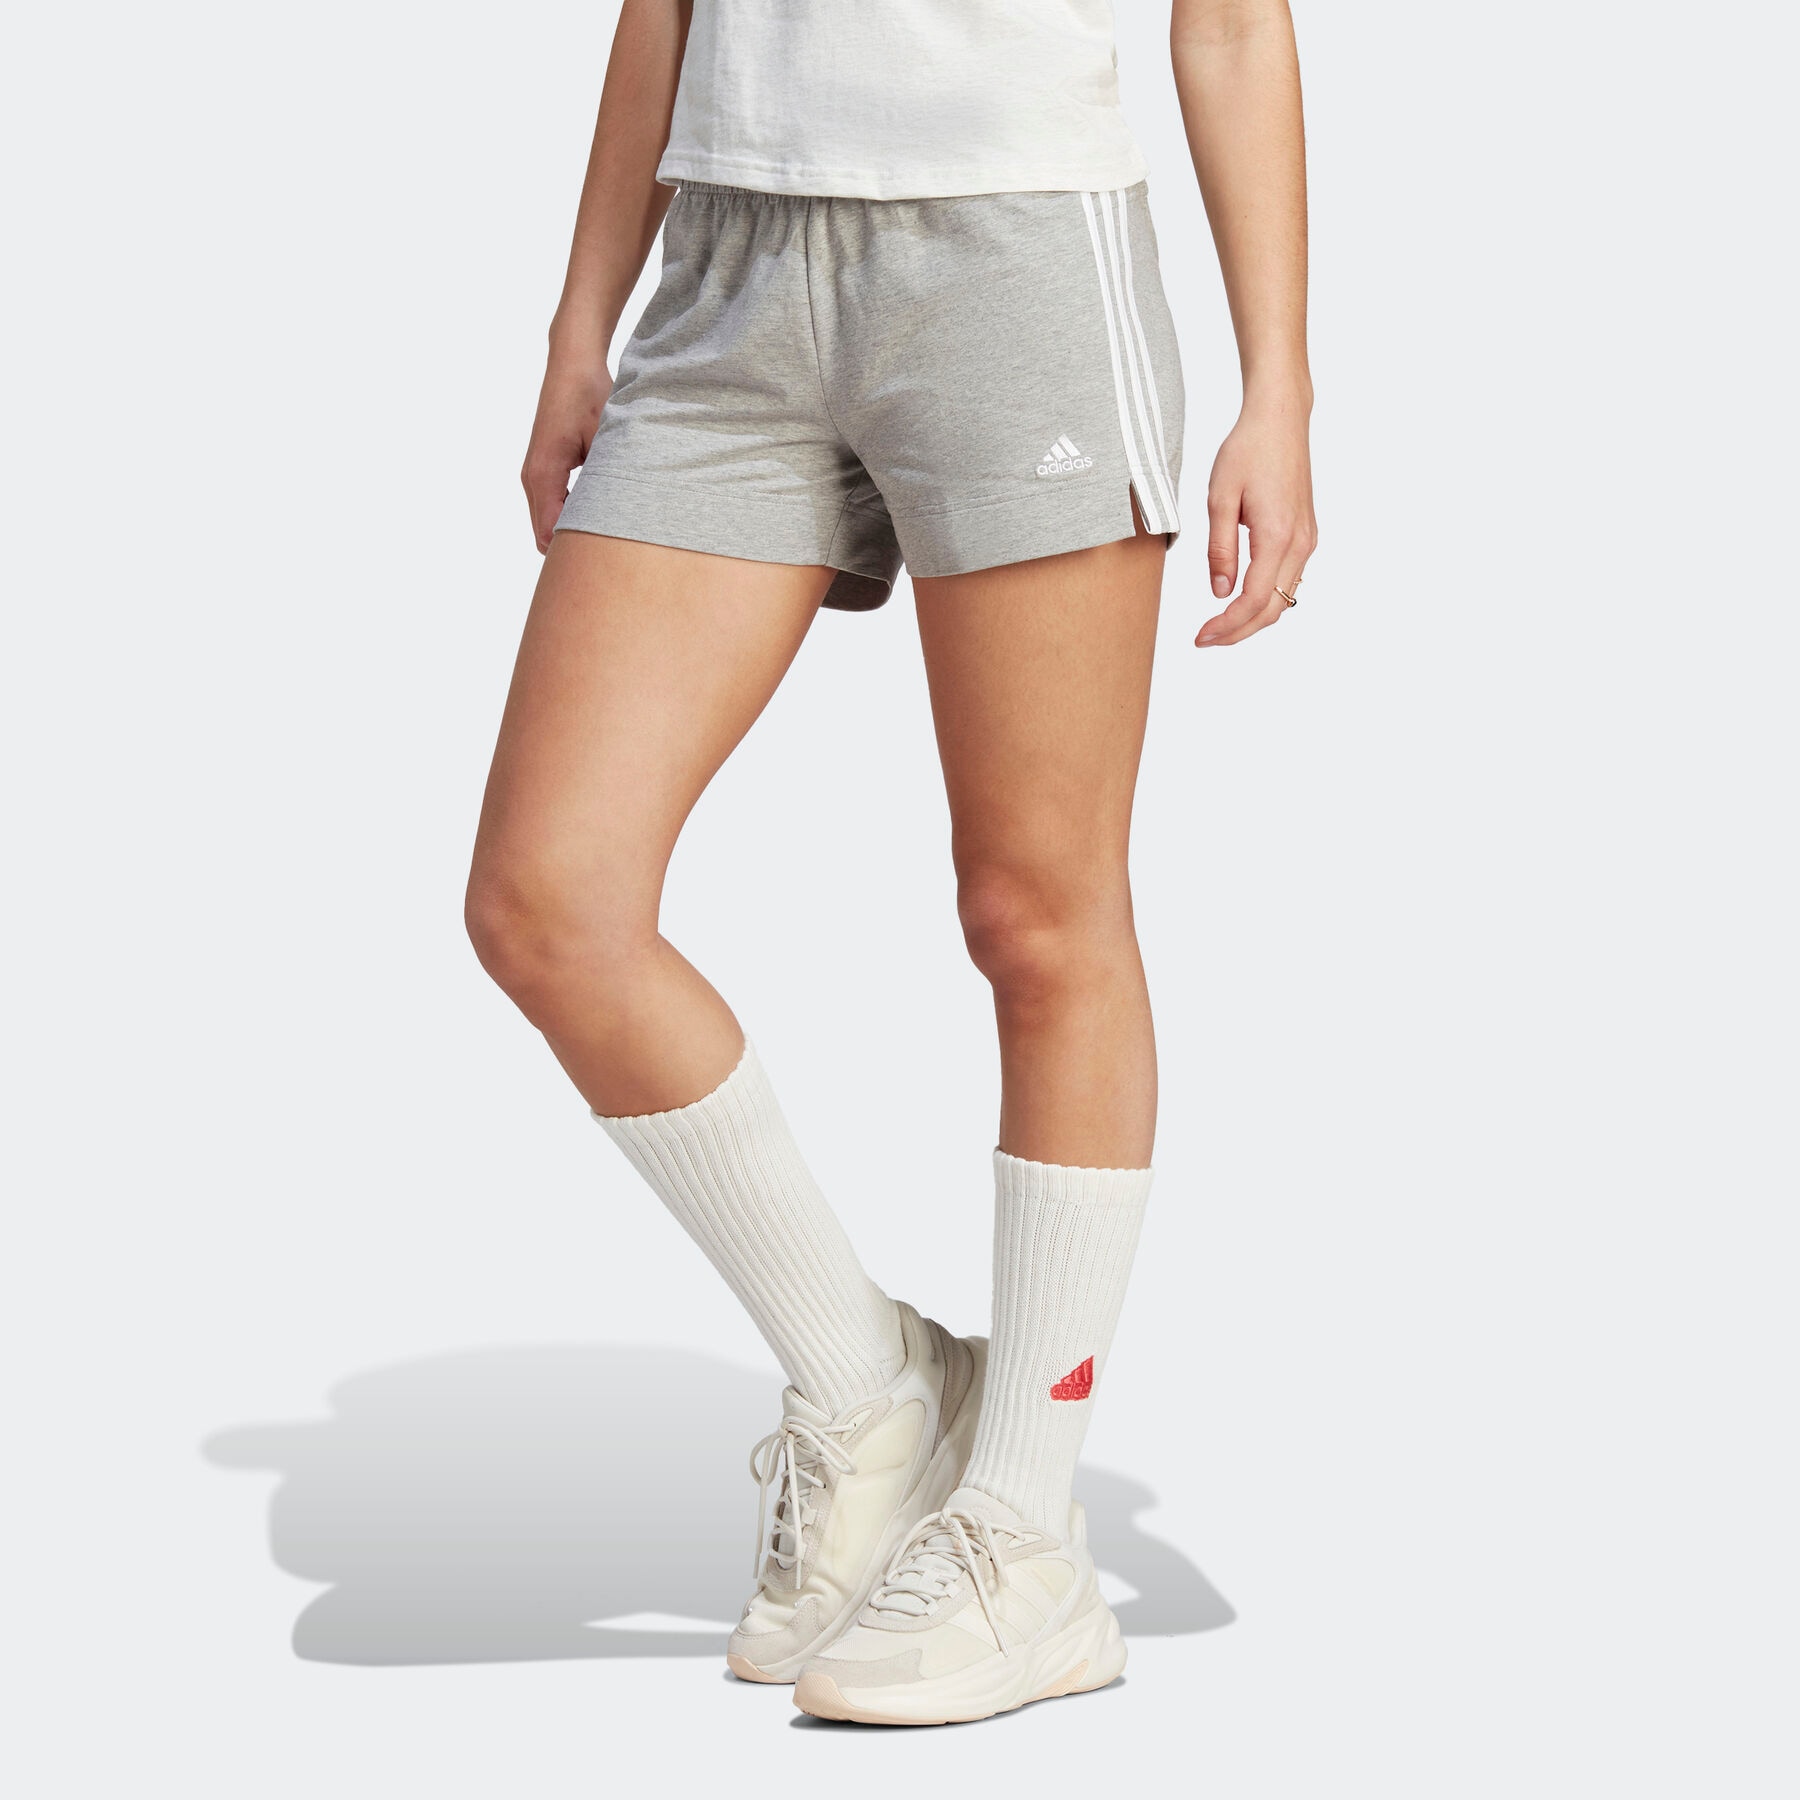 SJ »W tlg.) bei 3S (1 Sportswear online adidas Shorts shoppen Jelmoli-Versand Schweiz SHO«,